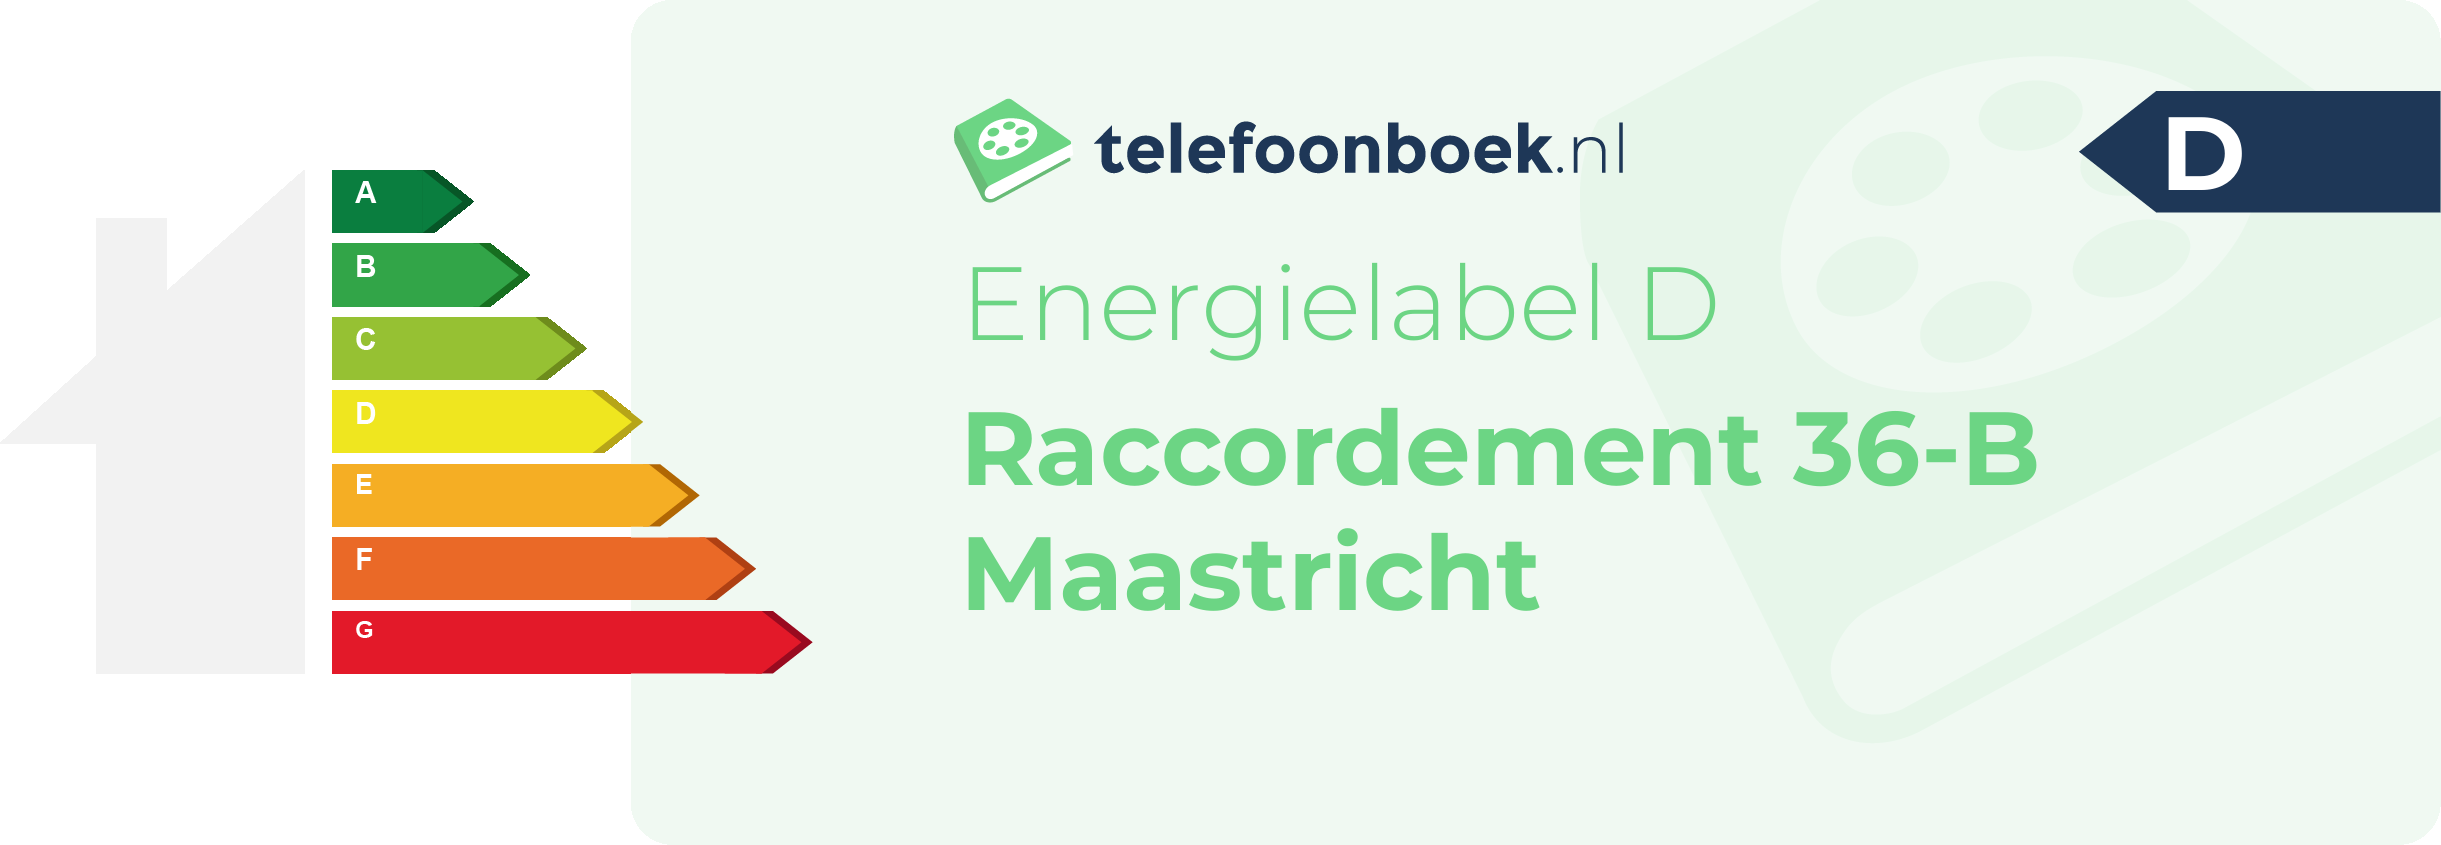 Energielabel Raccordement 36-B Maastricht